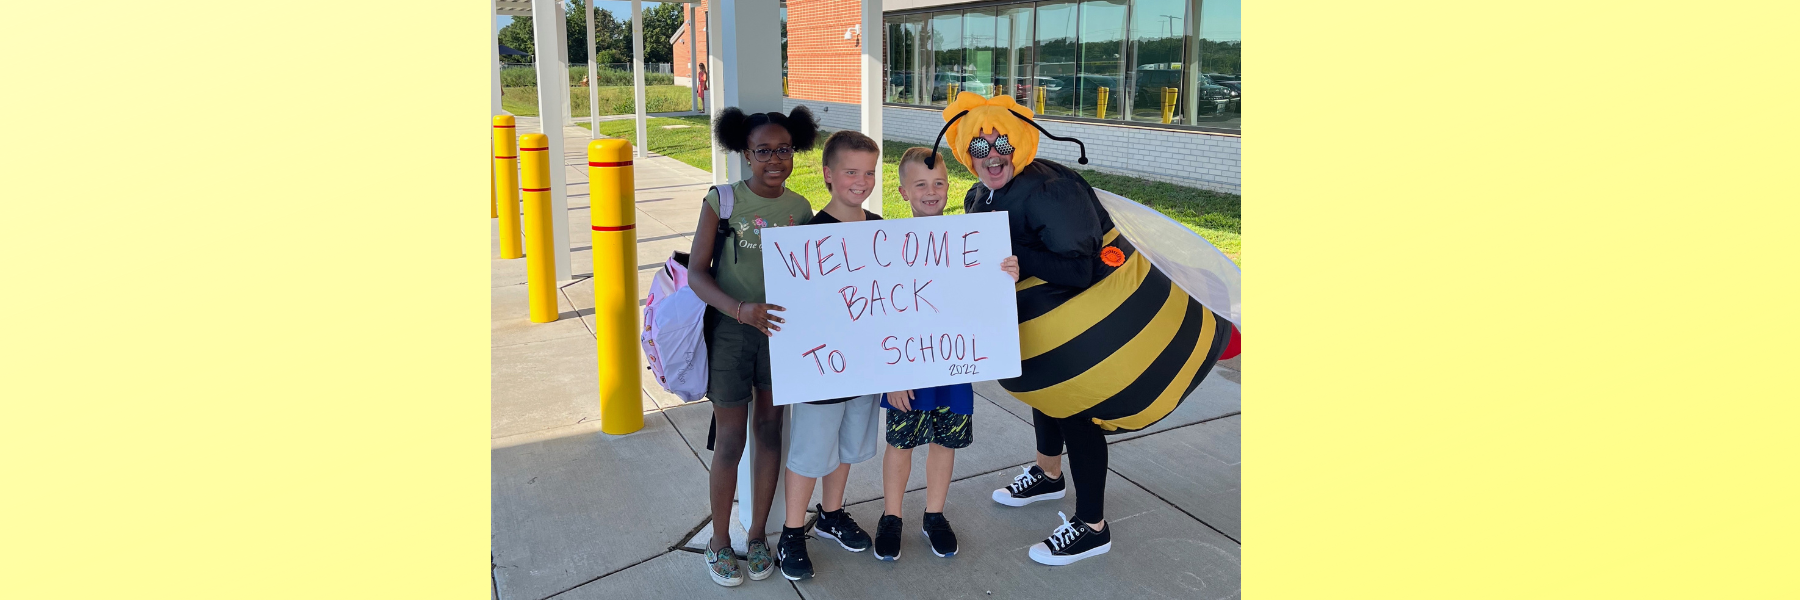 school mascot, children, welcome back sign